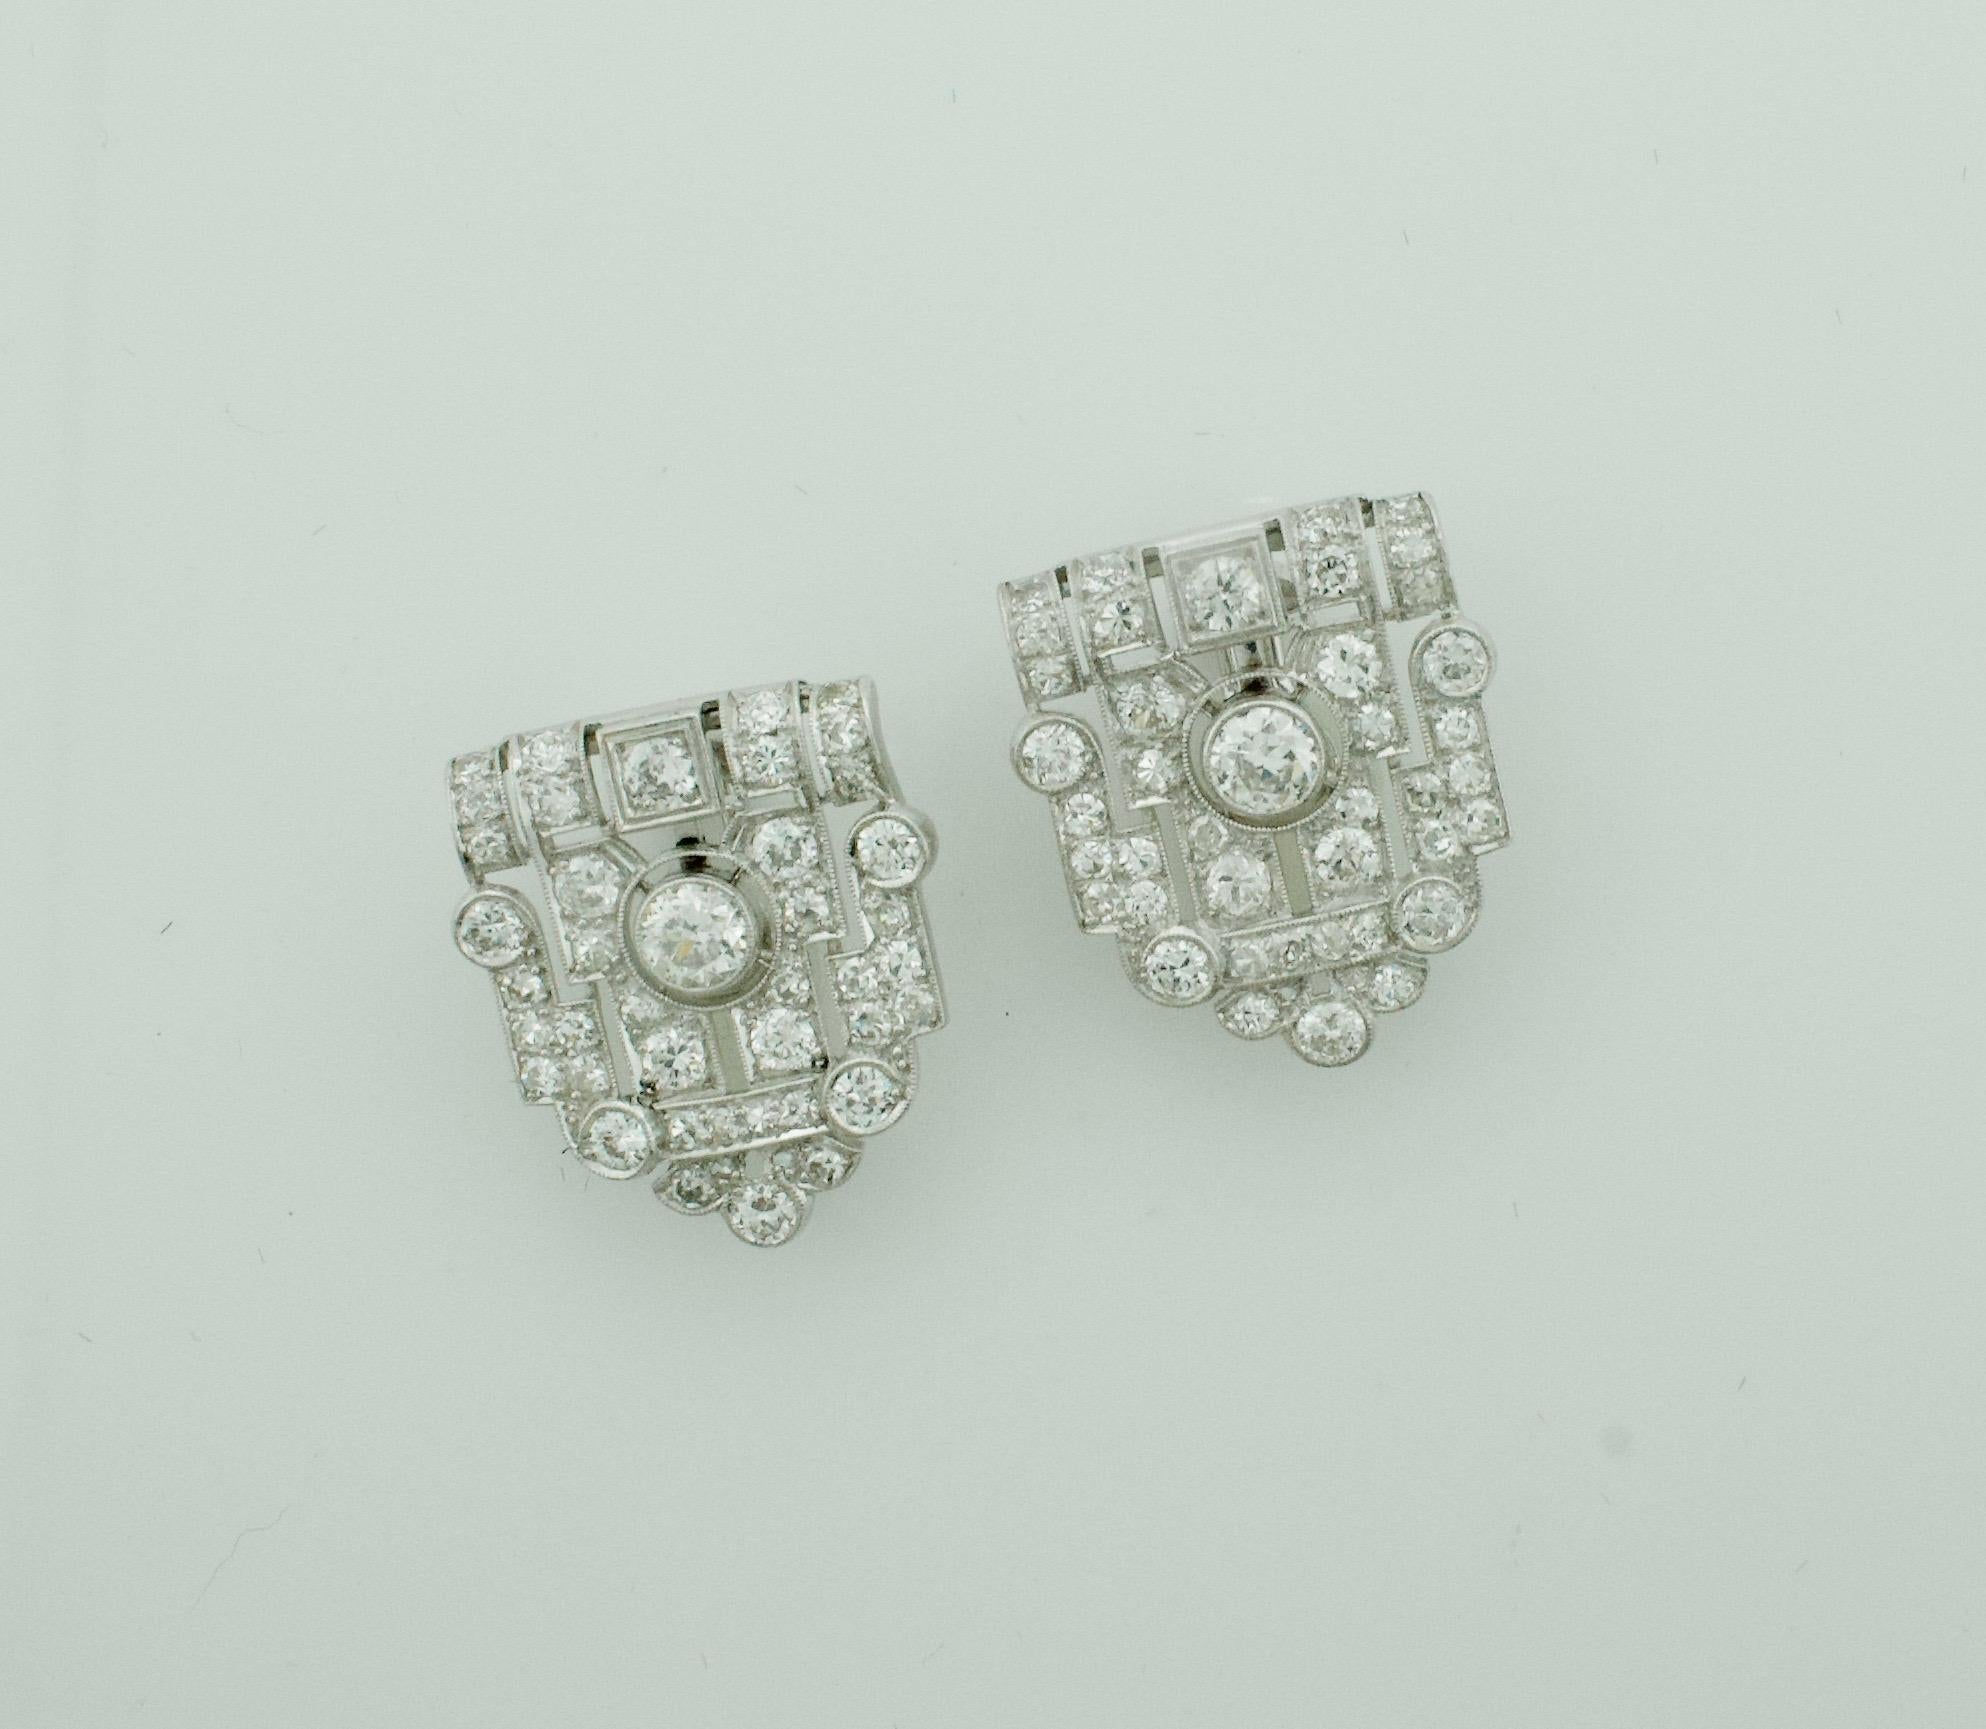 Art Deco Diamond Earrings in Platinum Circa  1930's
Two Old European Cut Diamonds Weighing 1.20  Carats Approximately 
Twelve Old European Cut Diamonds Weighing 1.95  Carats Approximately  
Sixty Two  Round Cut Diamonds Weighing 3.35 Carats